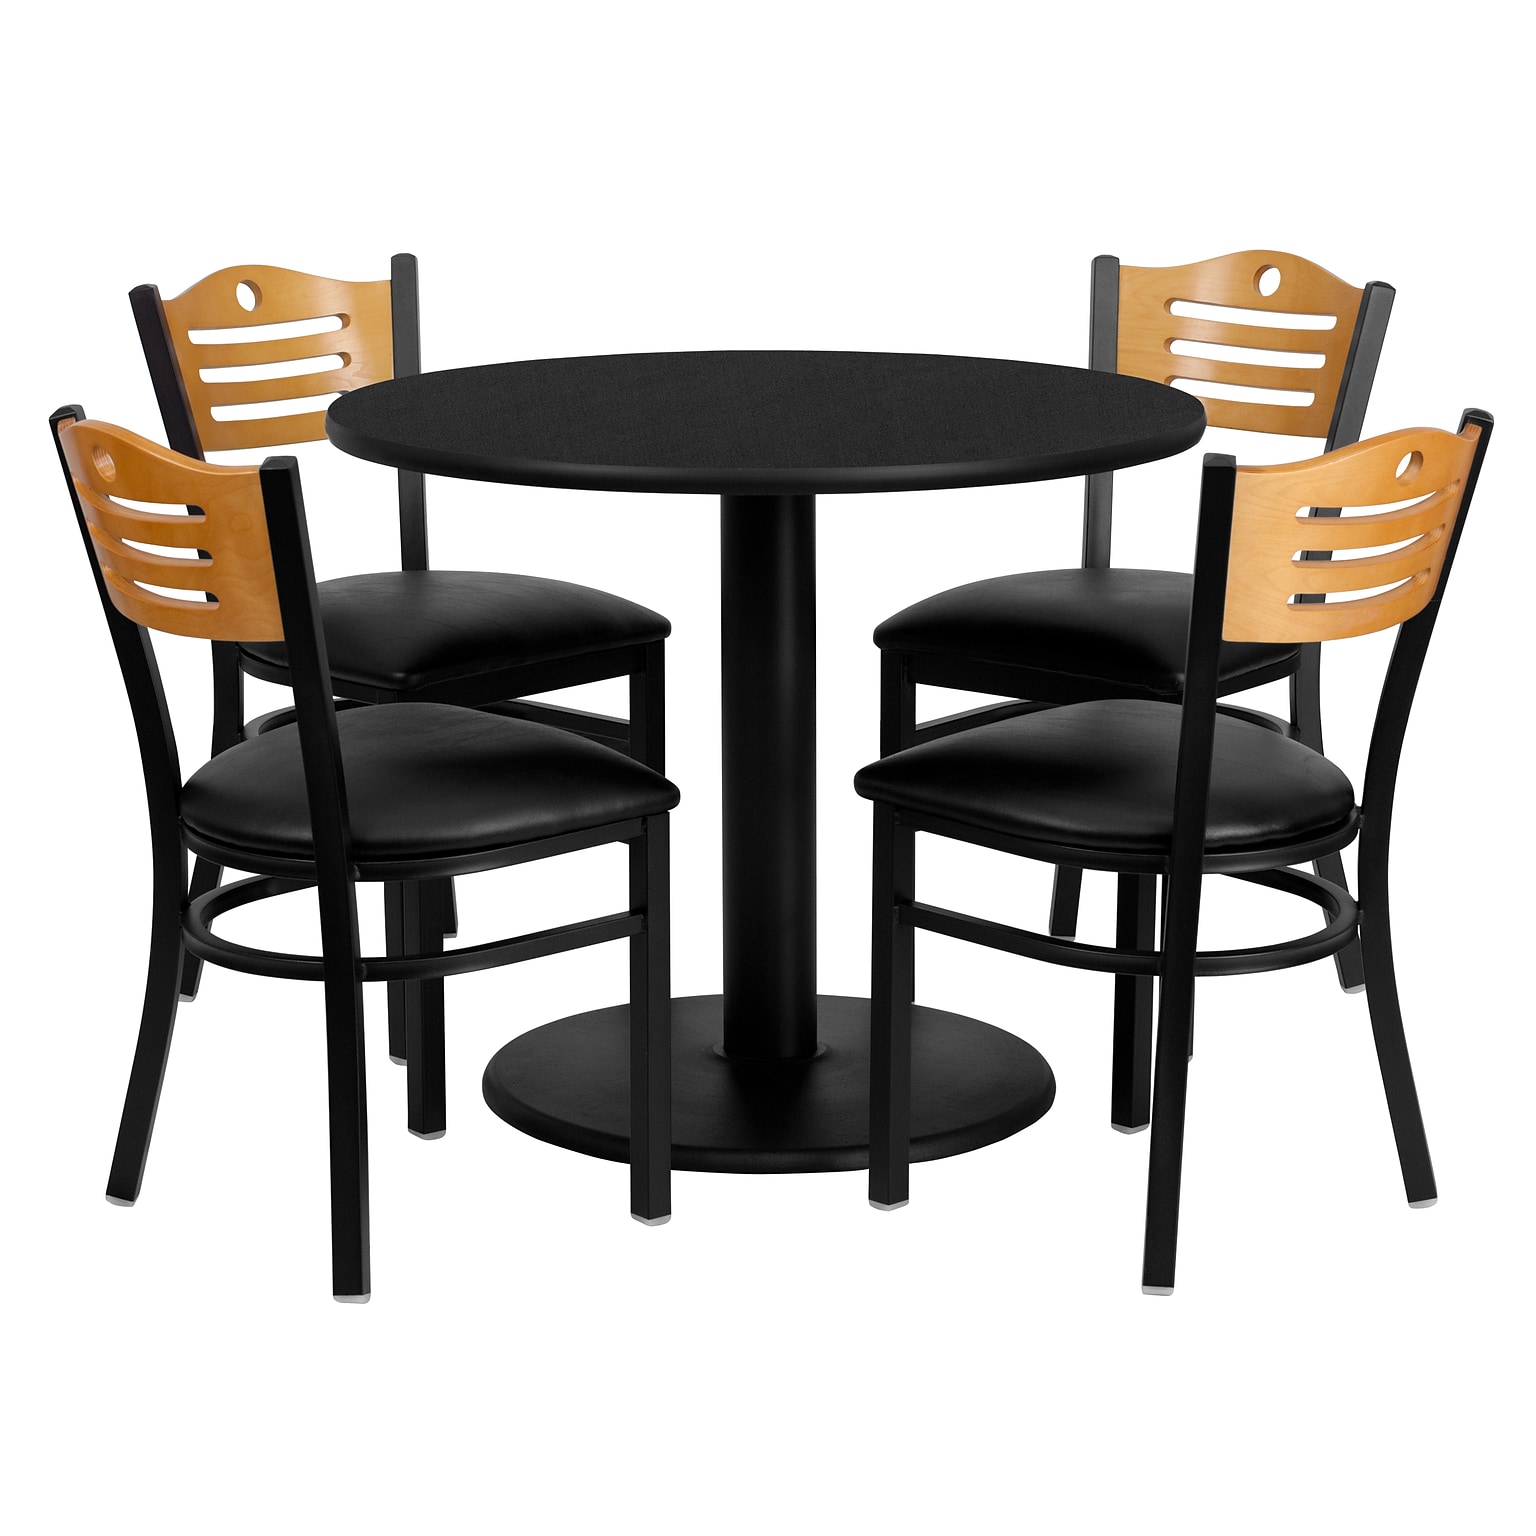 Flash Furniture Table Set 36D x 36W, Black (MD-0009-GG)